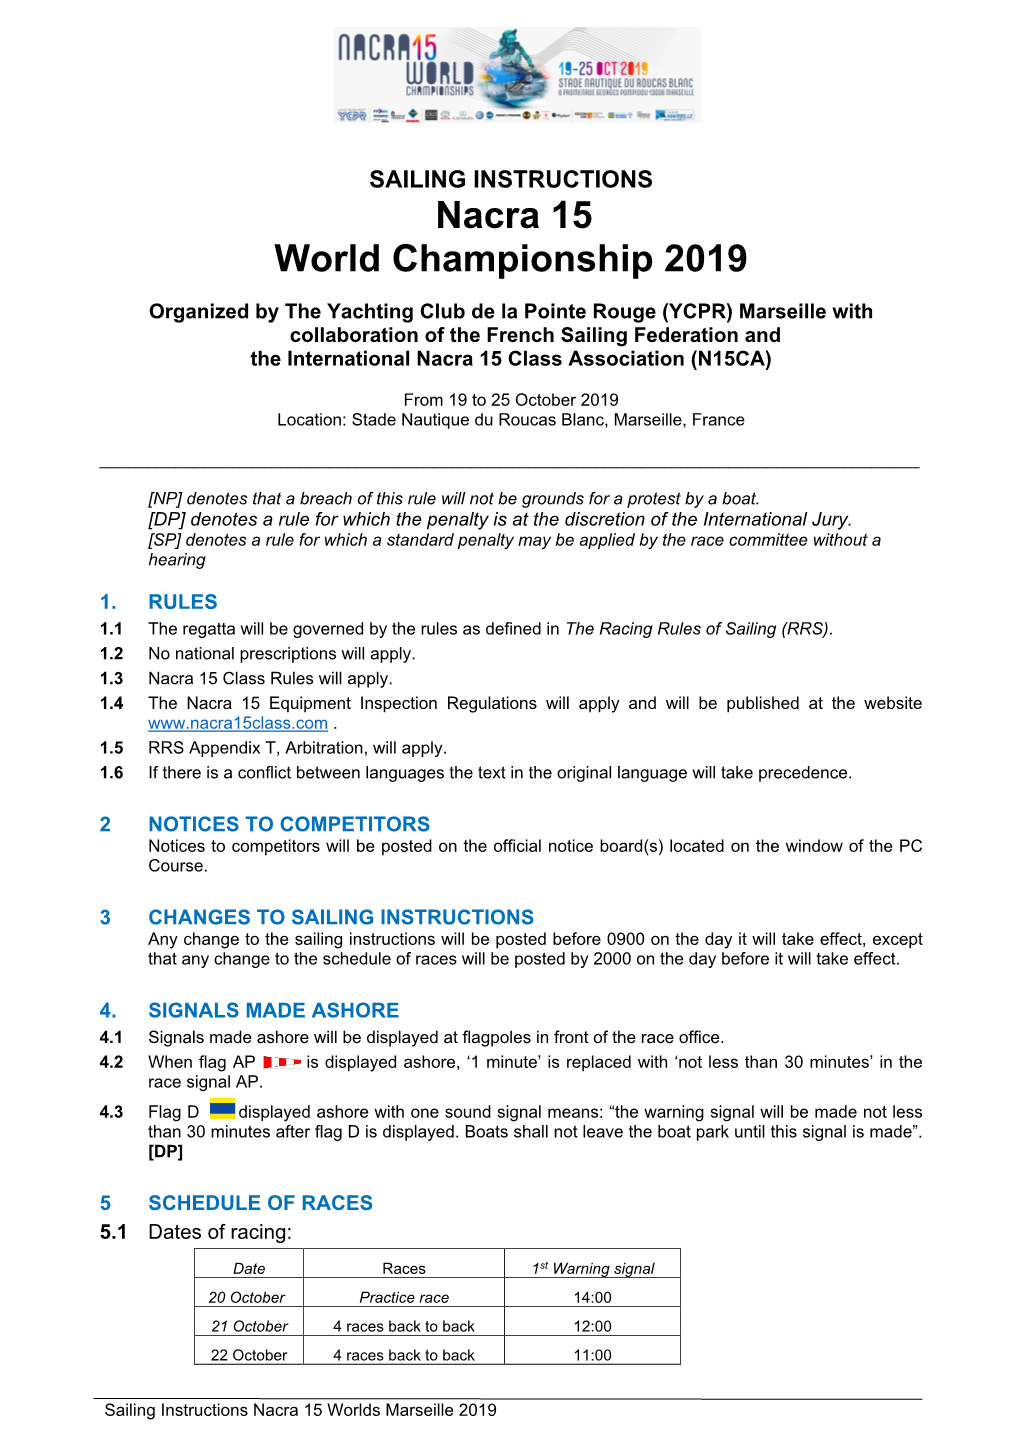 Nacra 15 World Championship 2019